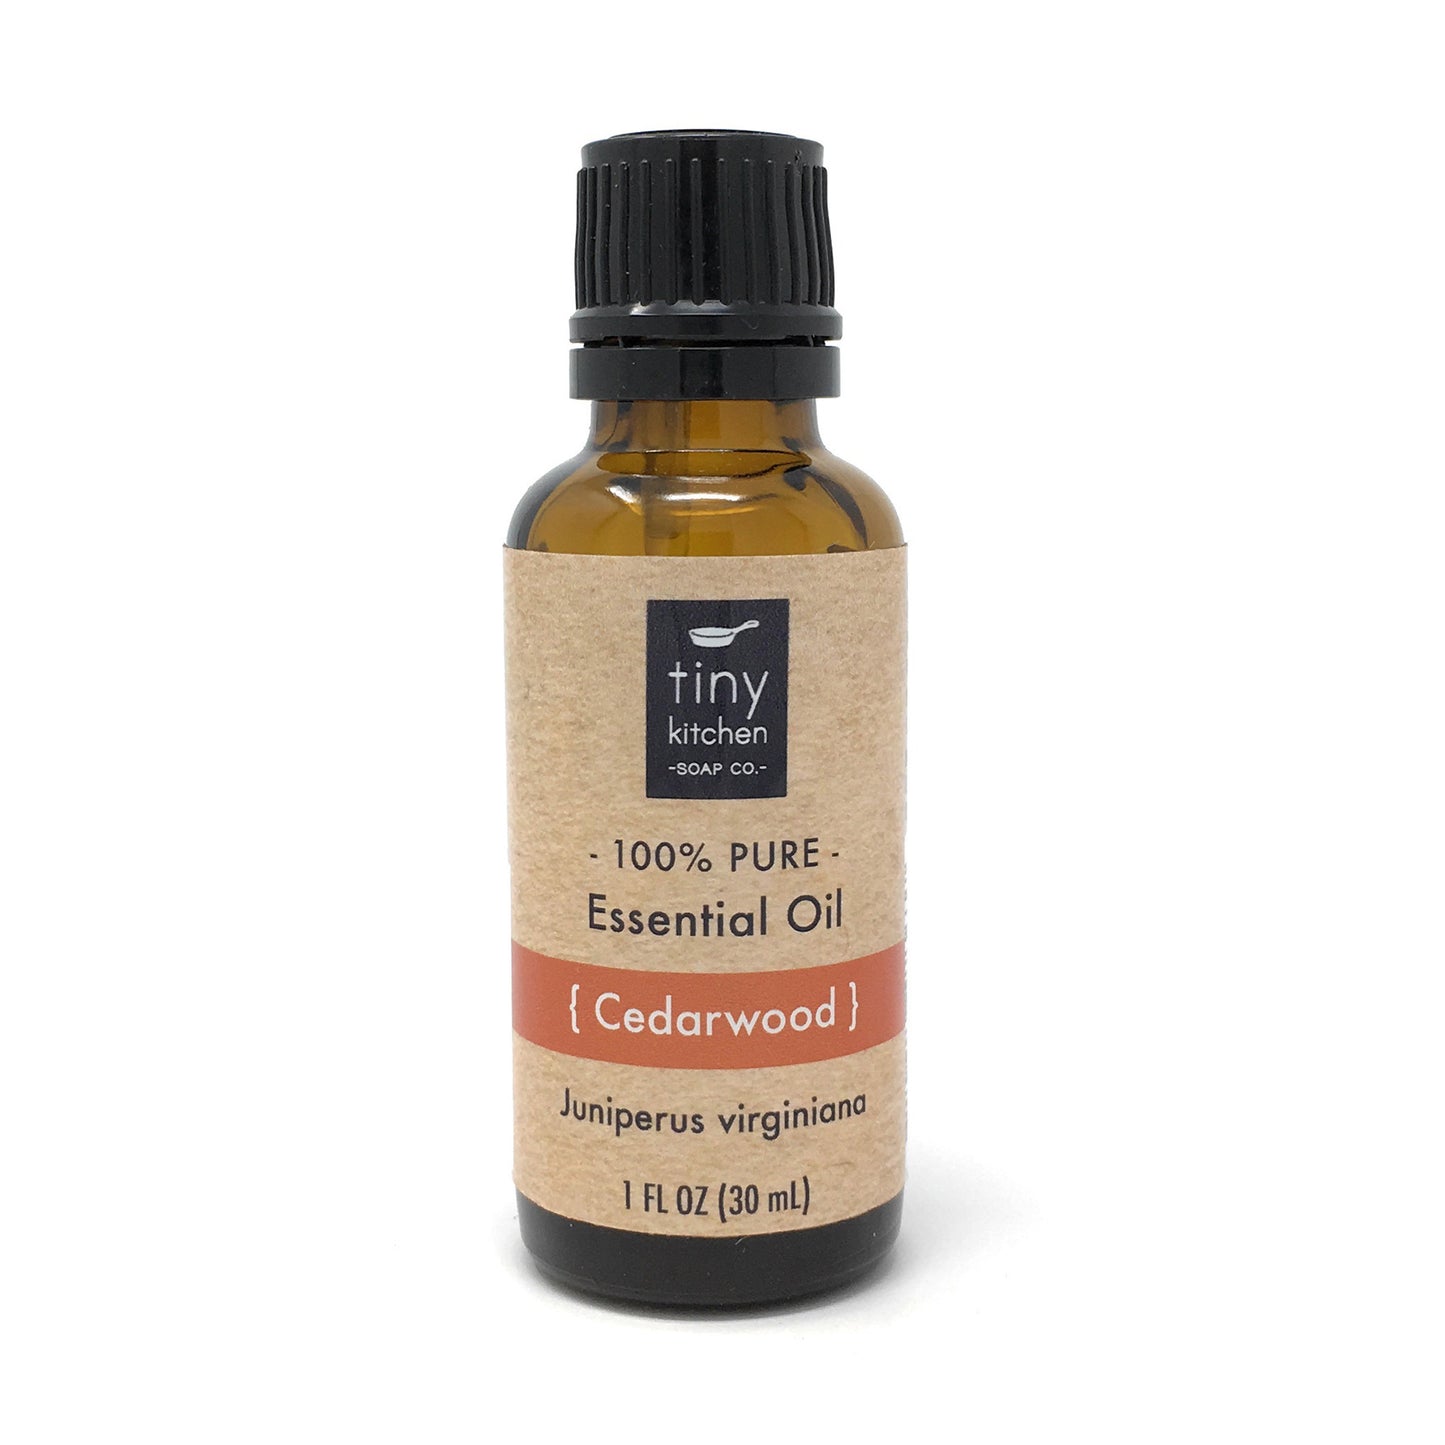 Pure Cedarwood Essential Oil - Juniperus virginiana